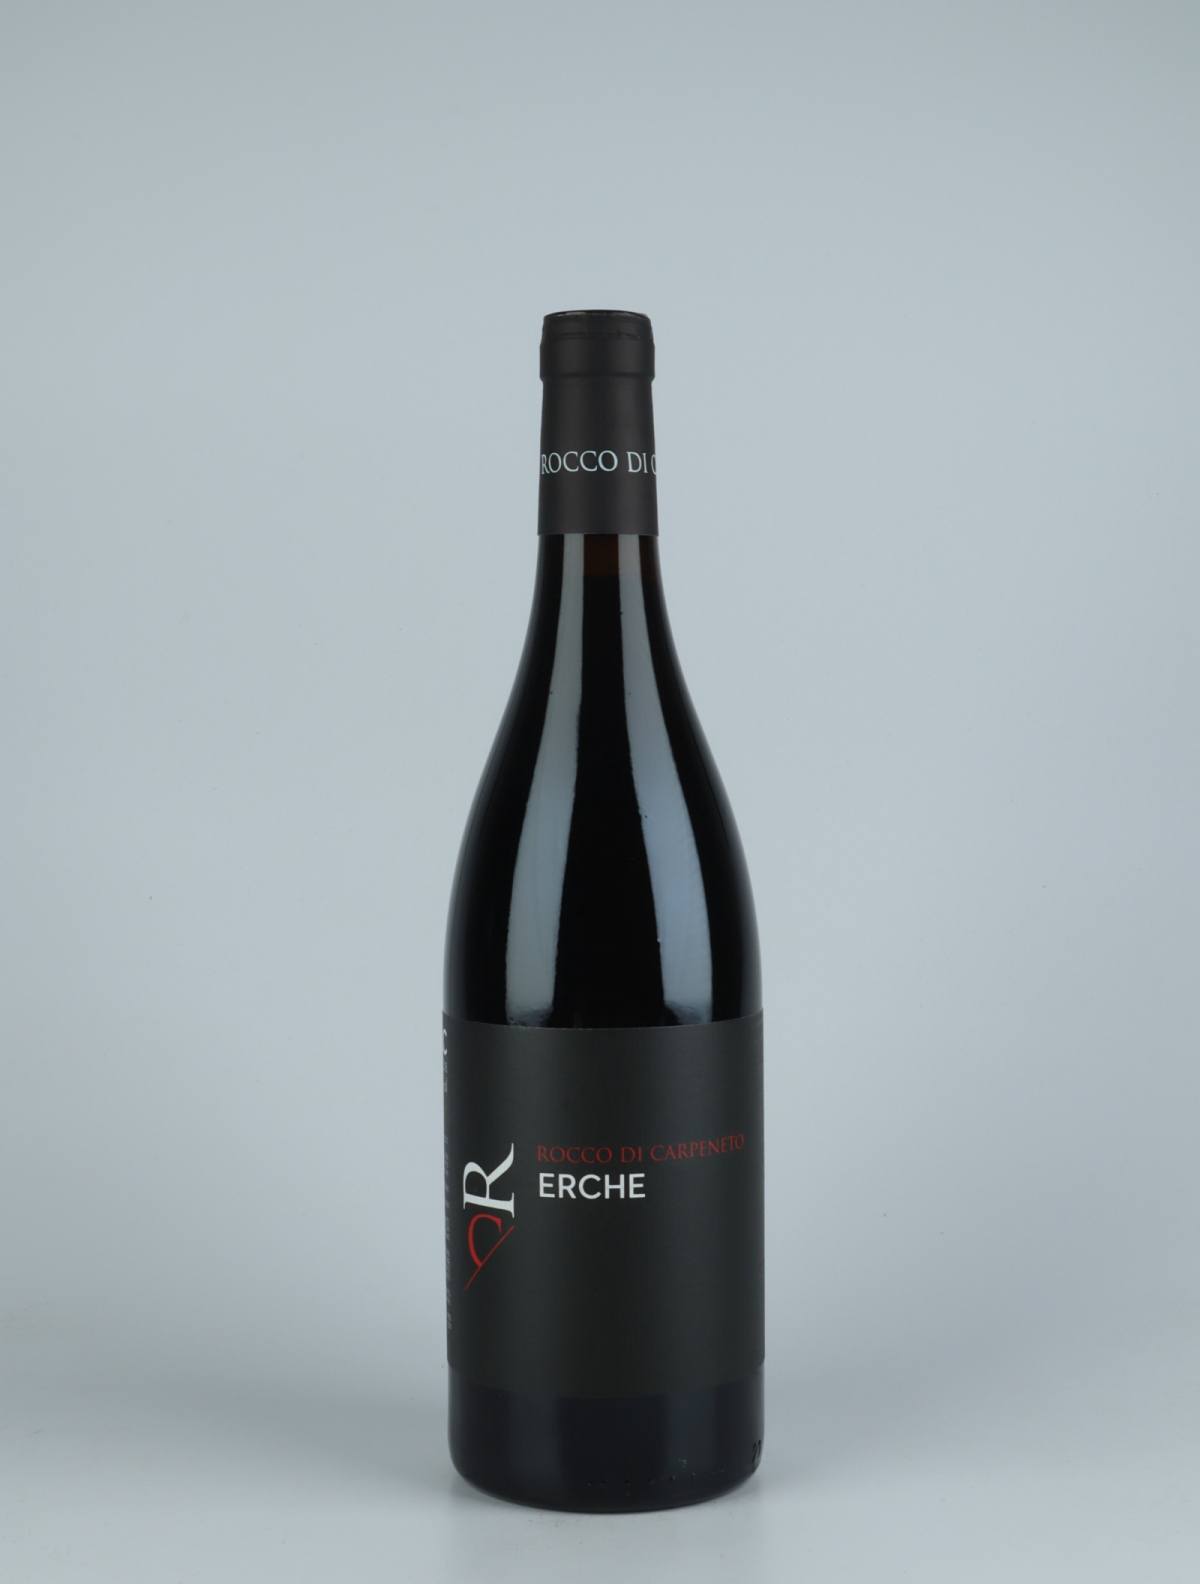 En flaske 2018 Erche Rødvin fra Rocco di Carpeneto, Piemonte i Italien